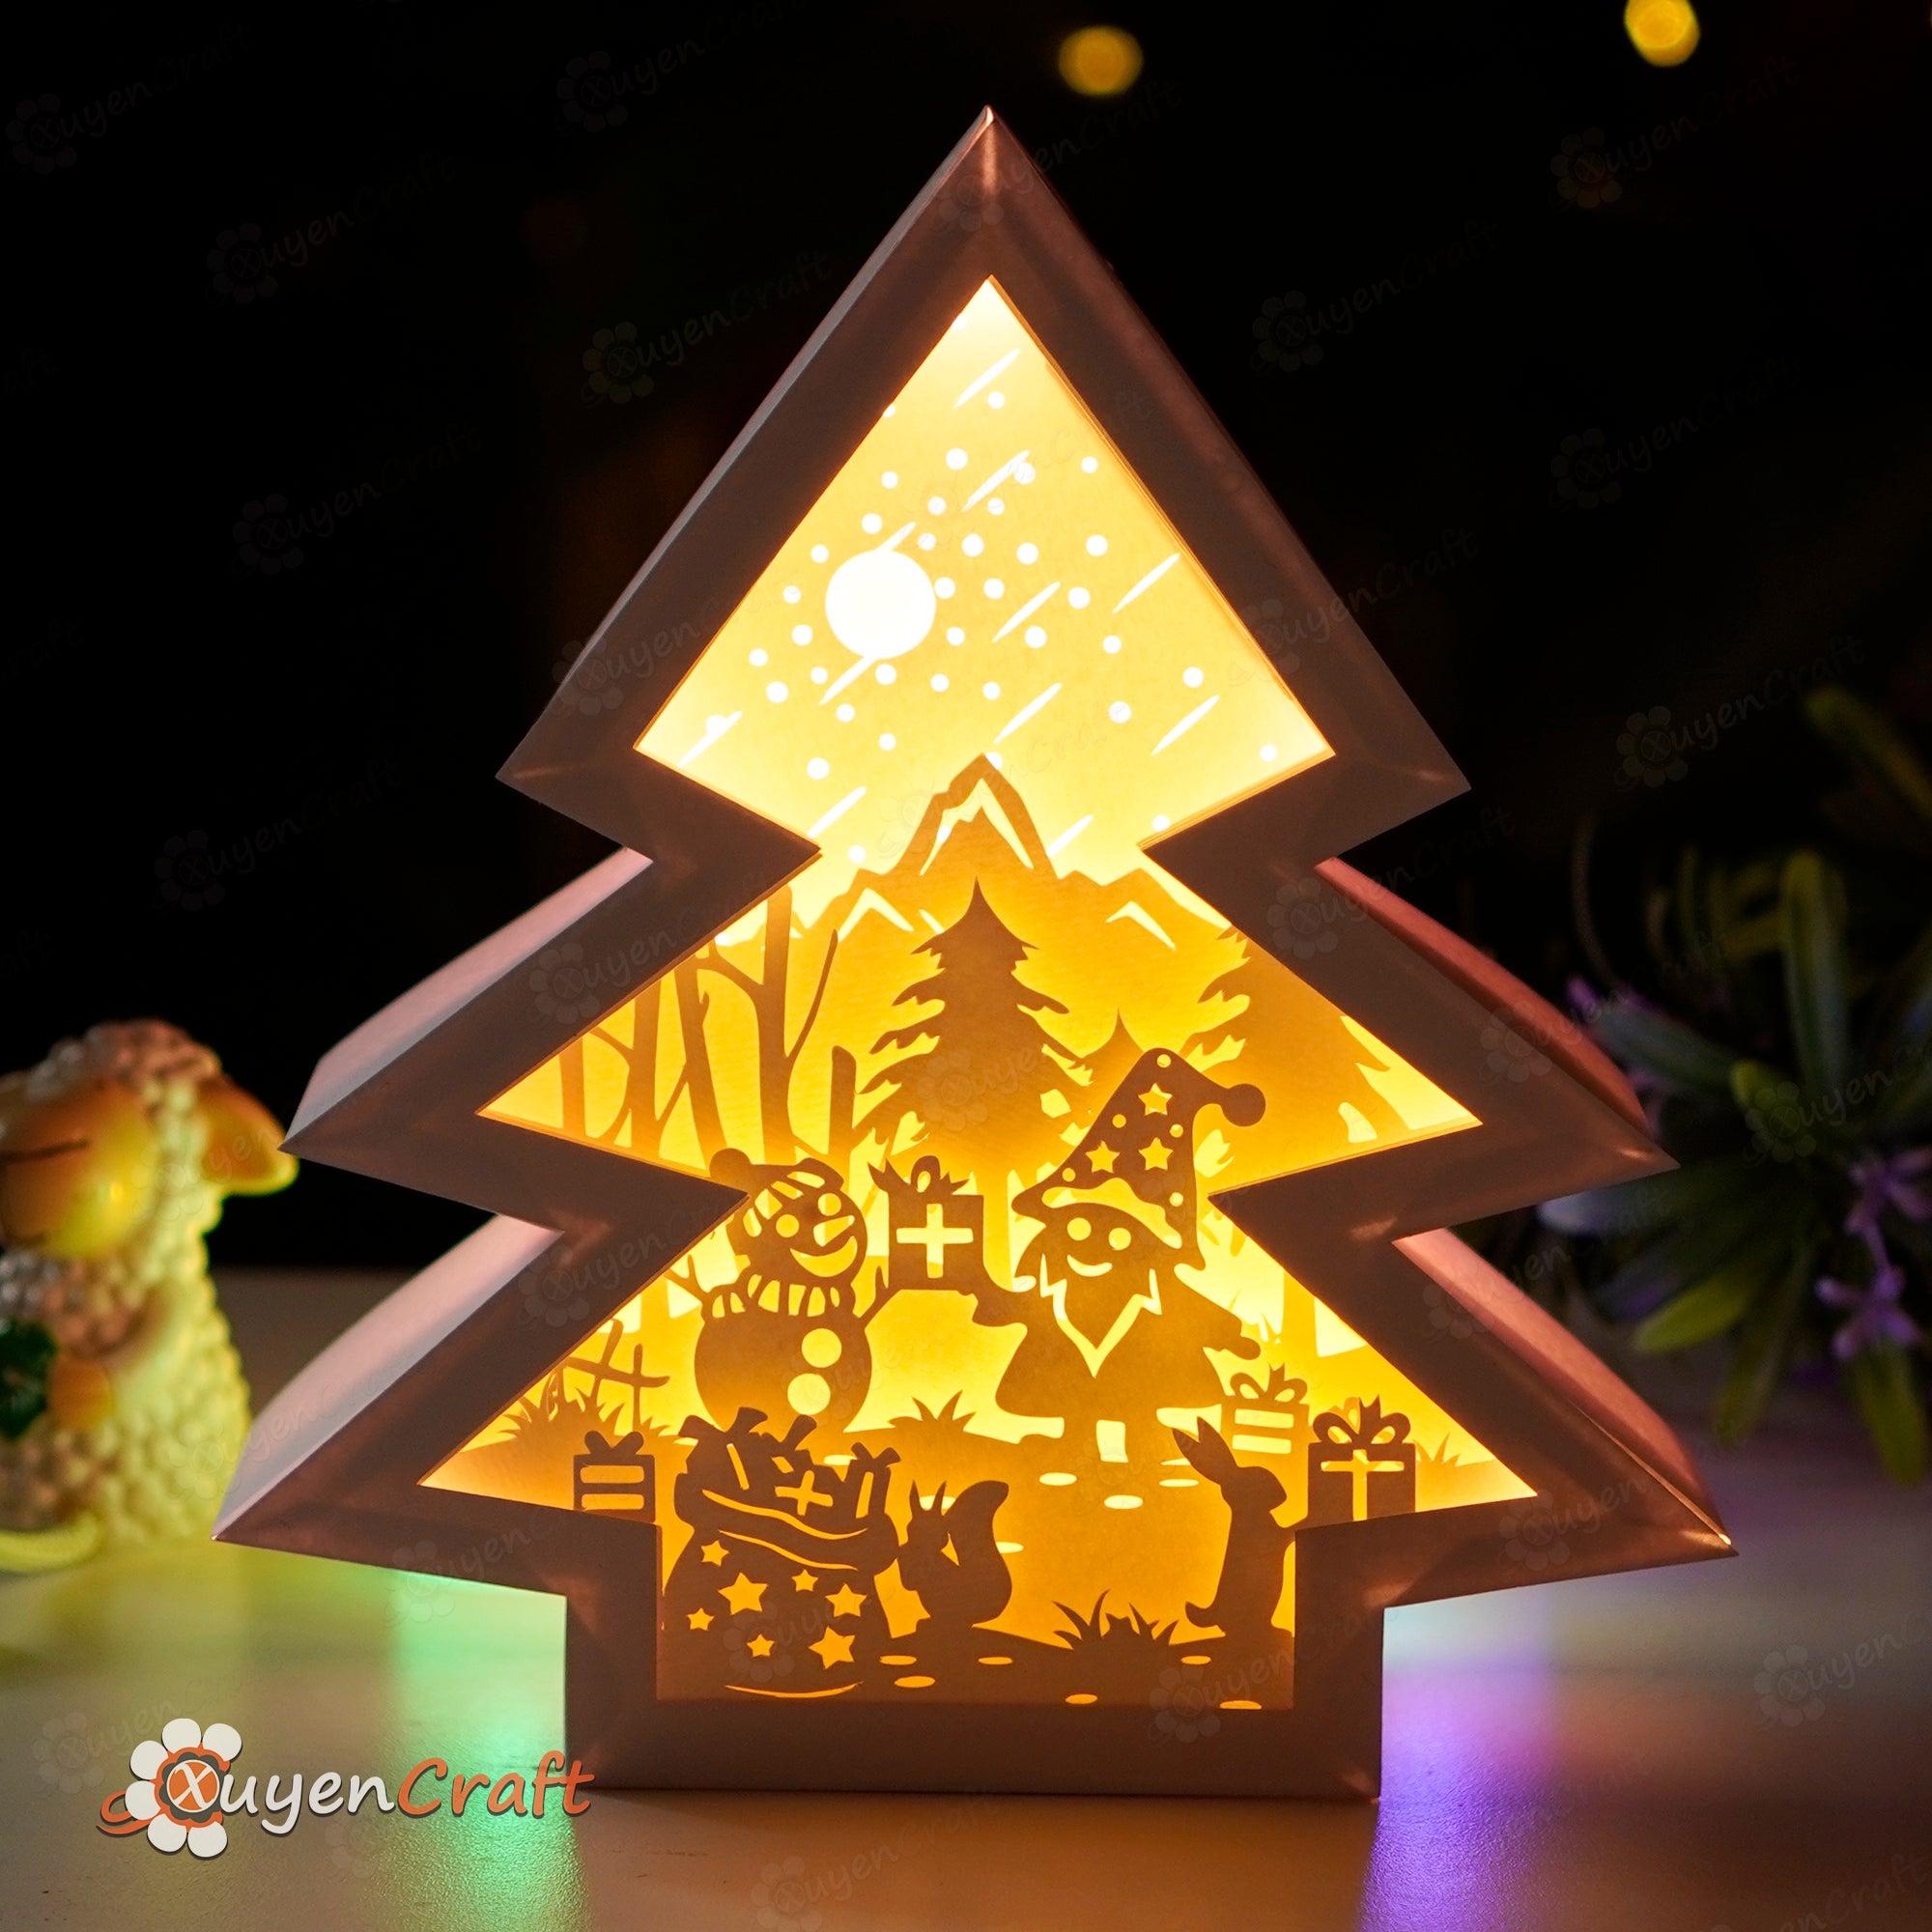 Snowman and Santa In Christmas Tree Shadow Box Christmas Lanterns Decoration, 3D layered Paper Cut Lamp